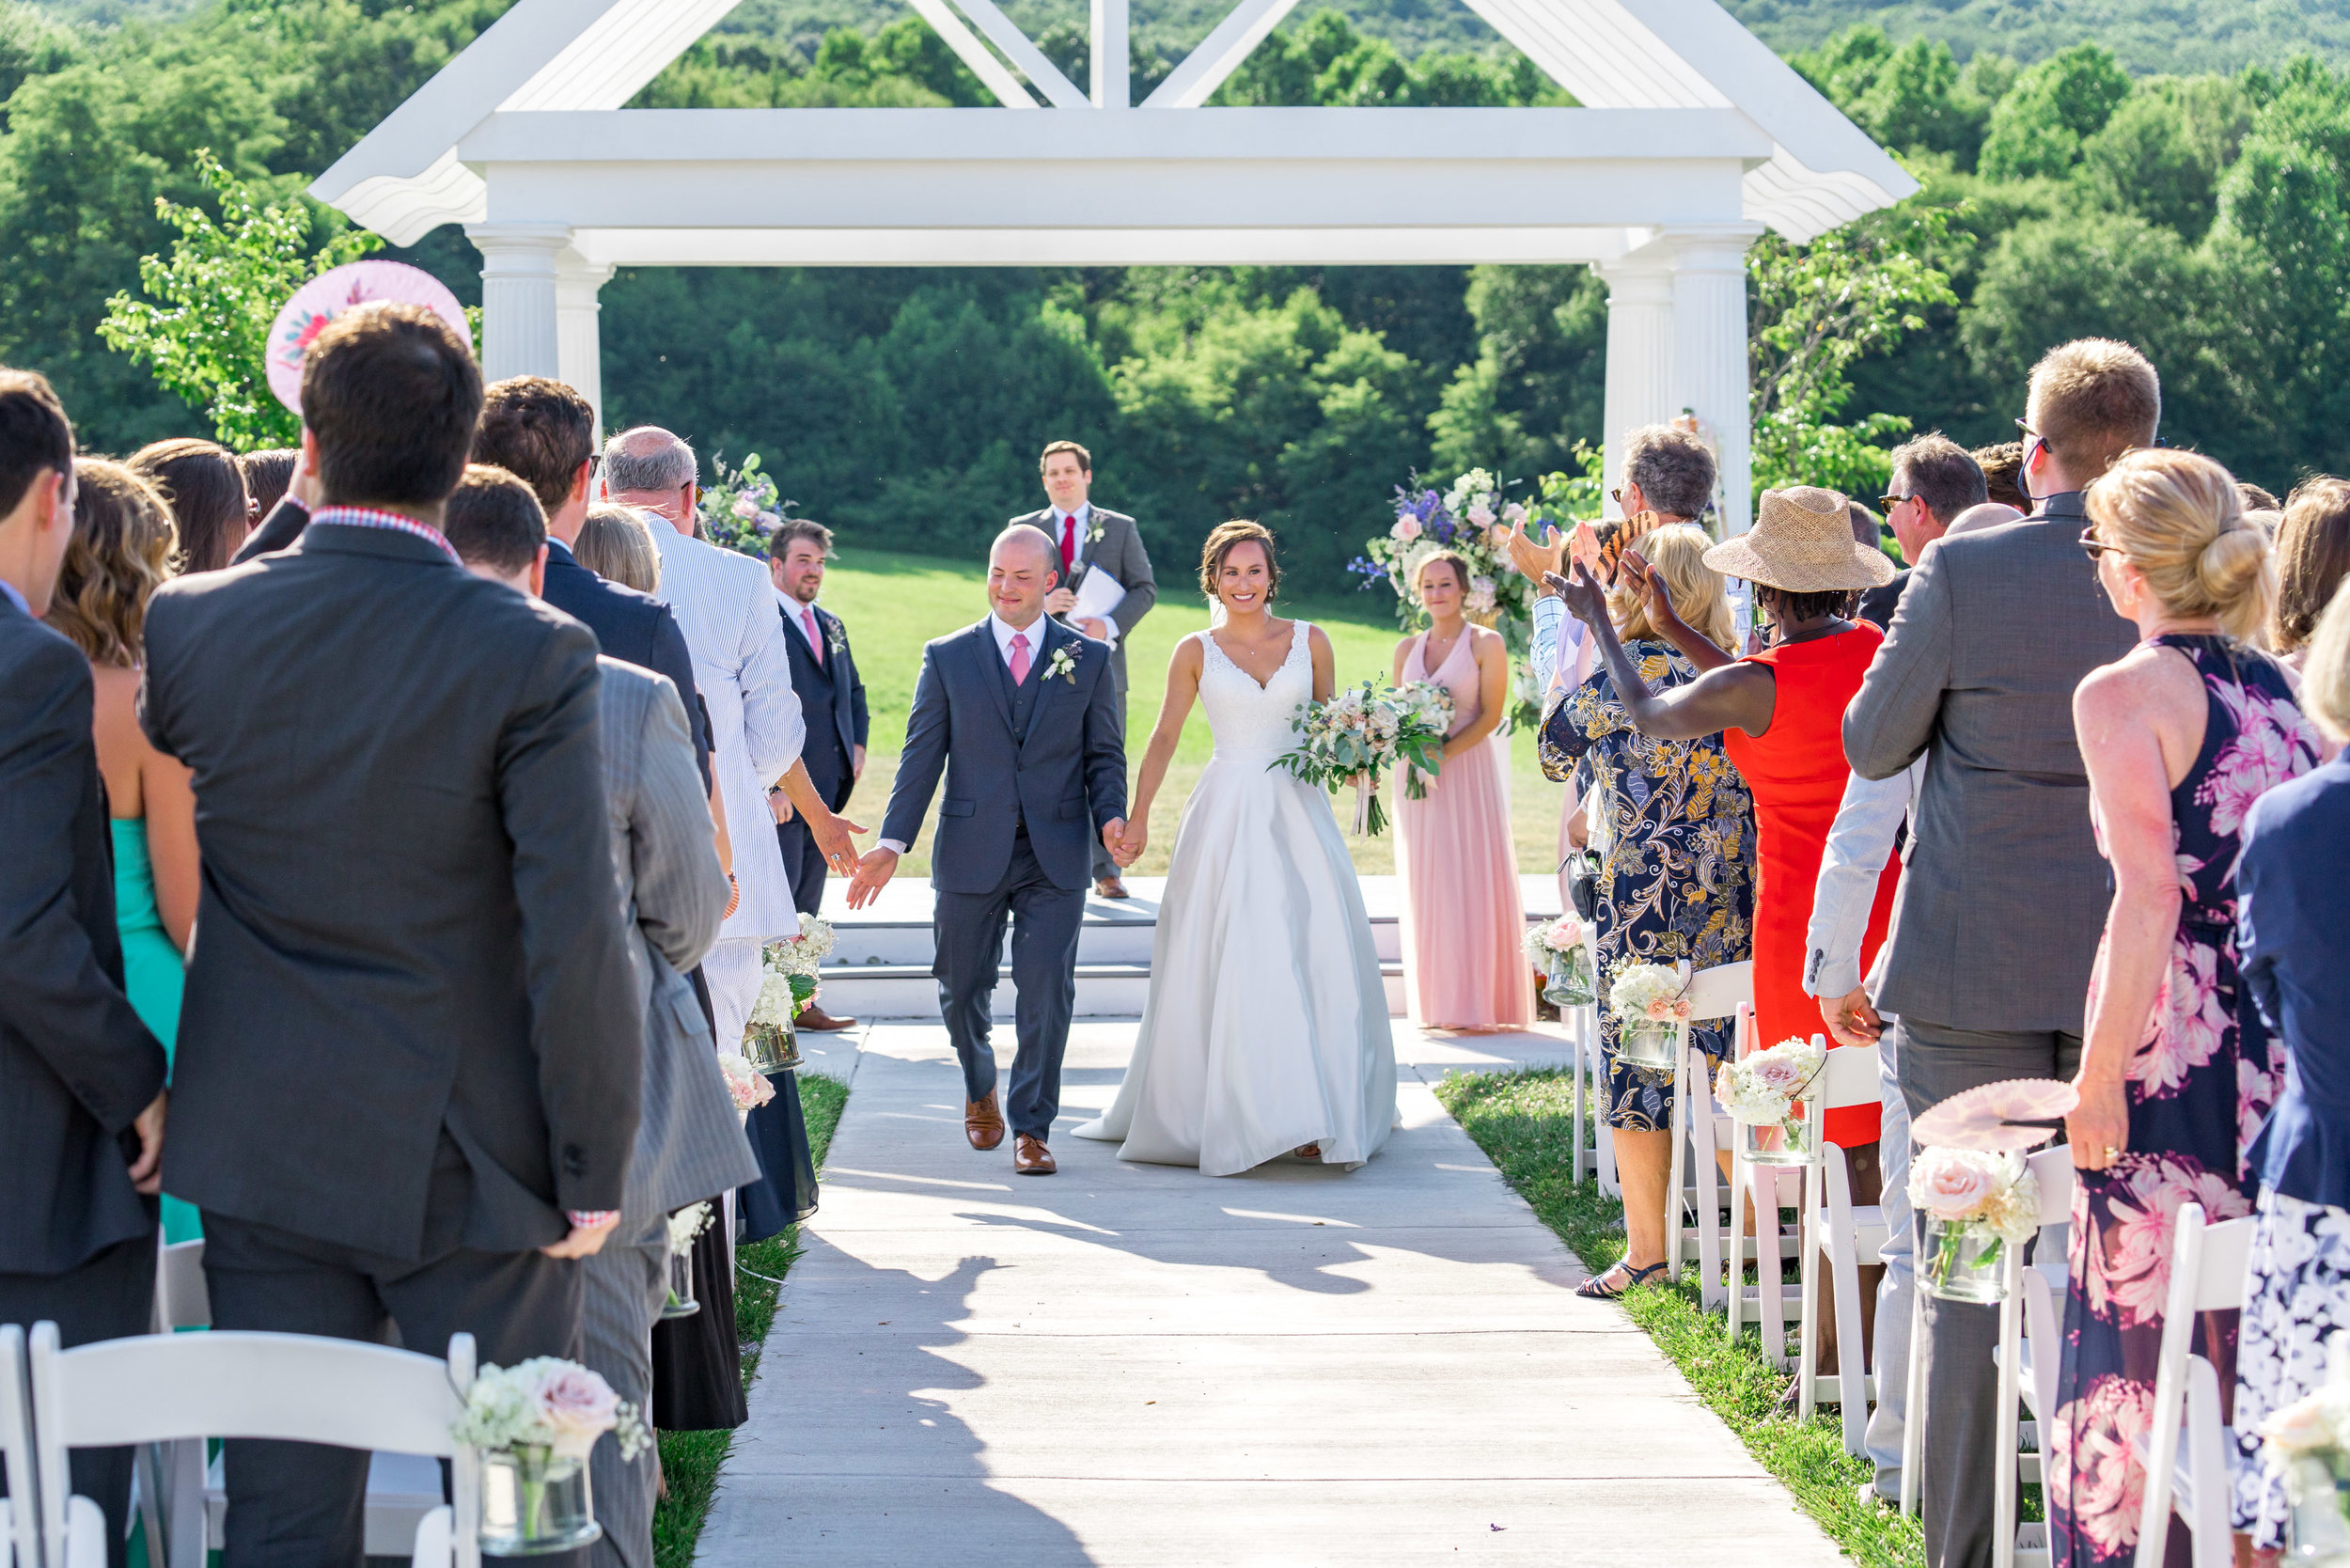 Wedding photos by Jessica Nazarova at Springfield lavender fields